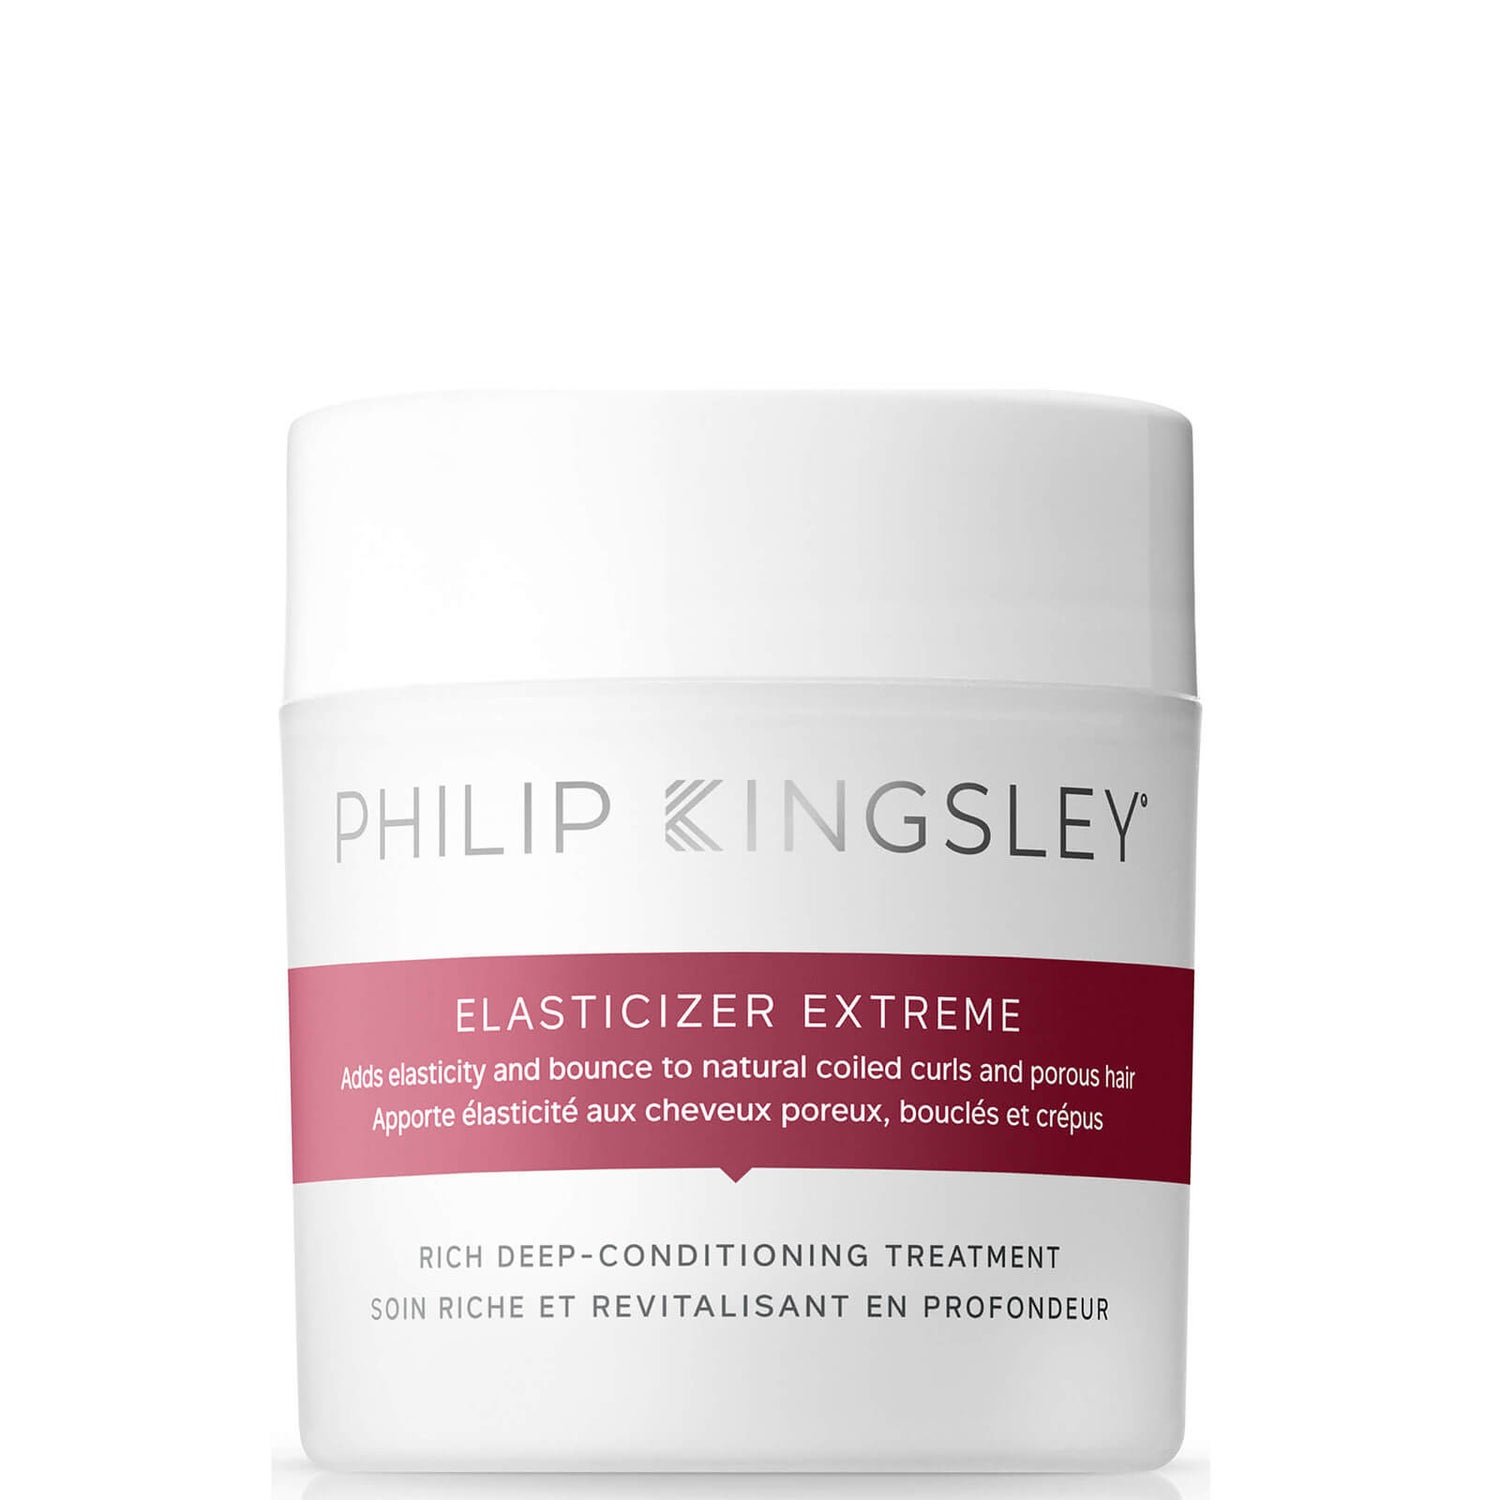 Philip Kingsley Elasticizer Extreme Rich Deep-Conditioning Treatment 150ml